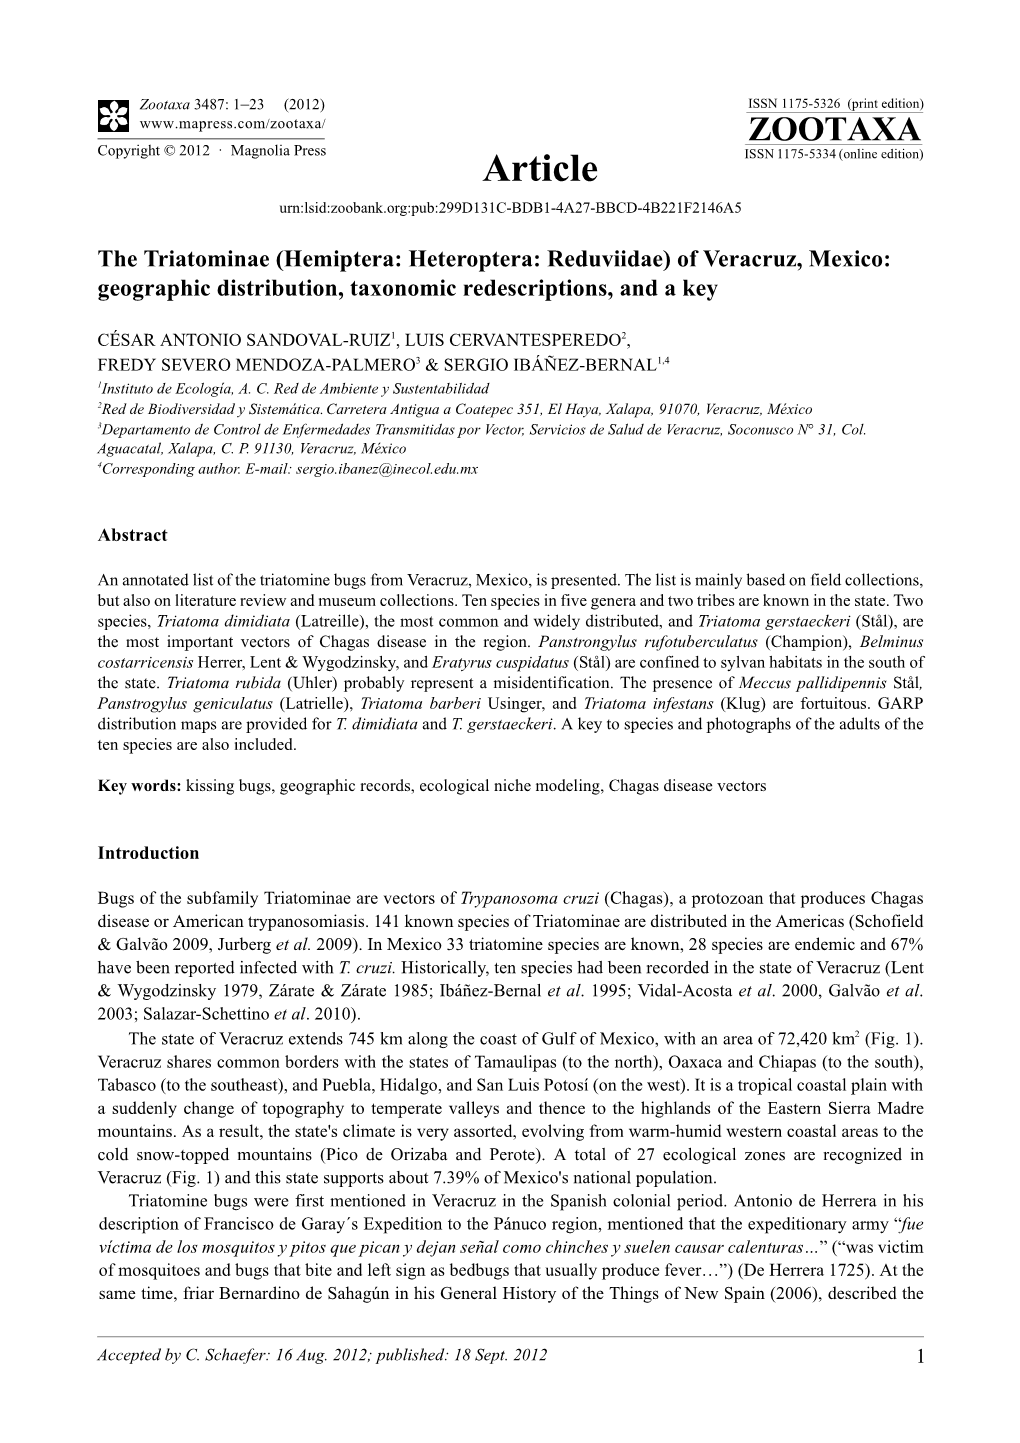 The Triatominae (Hemiptera: Heteroptera: Reduviidae) of Veracruz, Mexico: Geographic Distribution, Taxonomic Redescriptions, and a Key